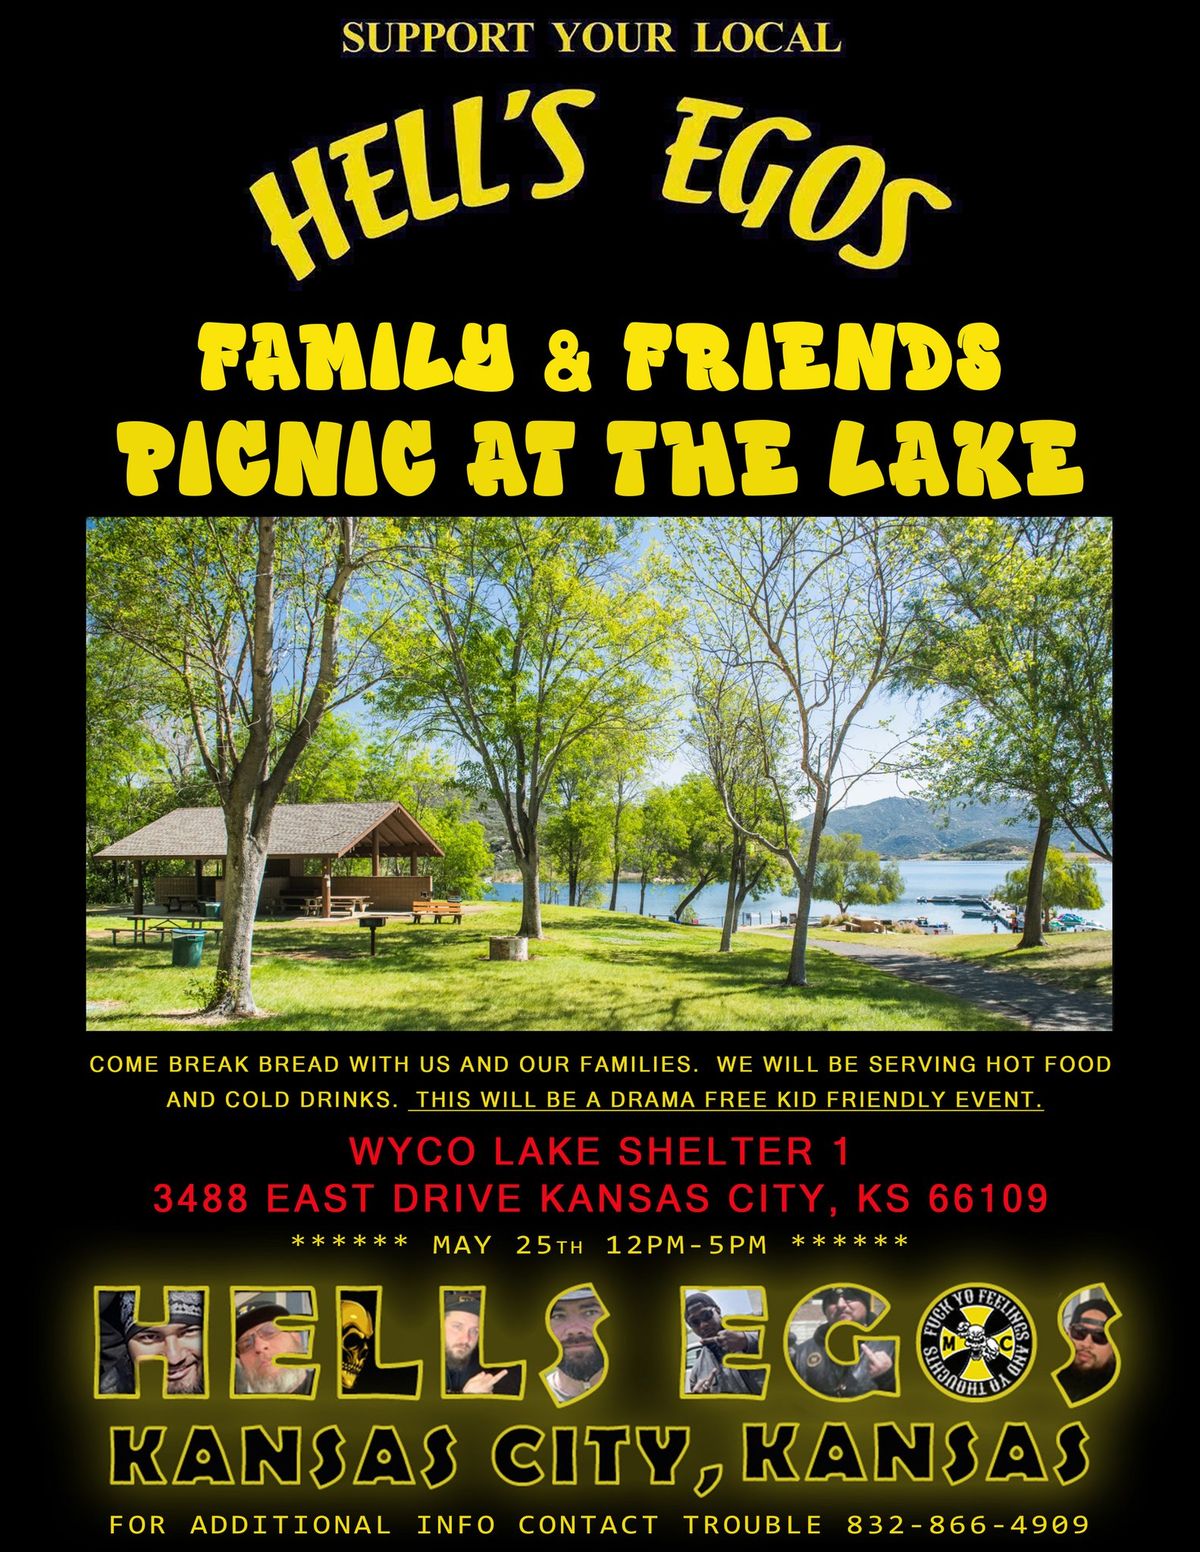 Family & Friends Picnic at the Lake!